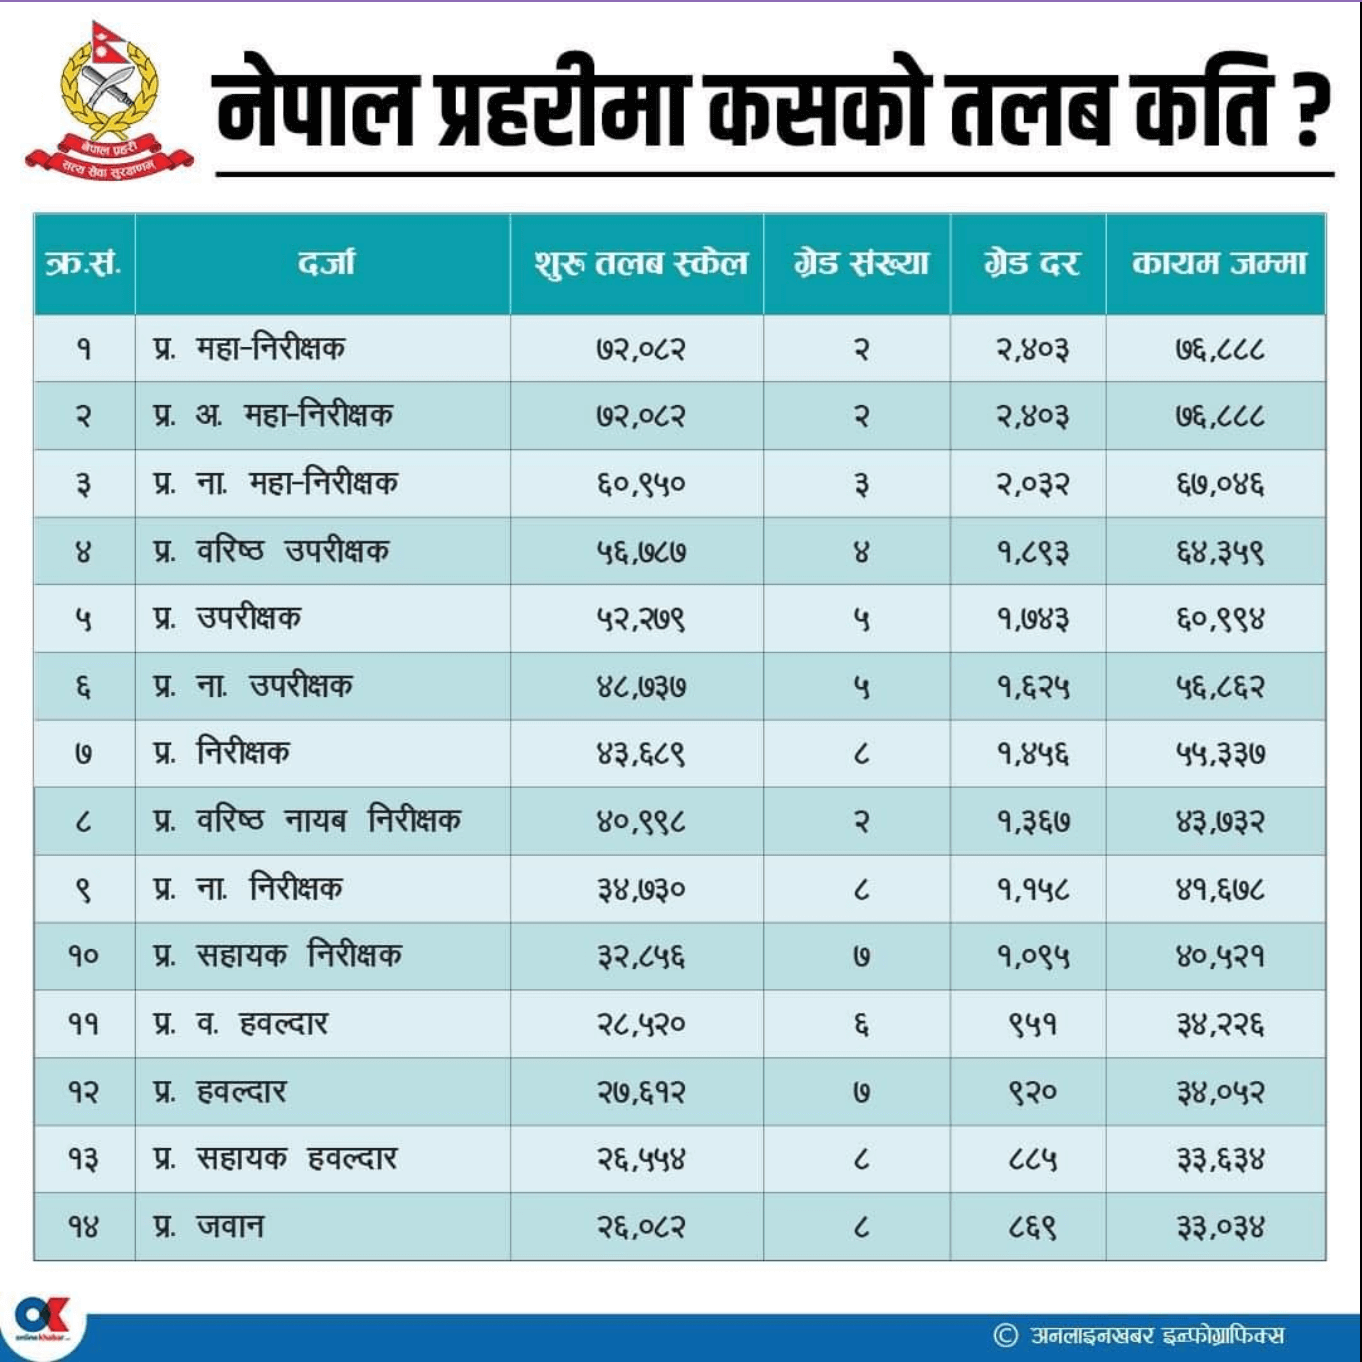 Nepal police salary range